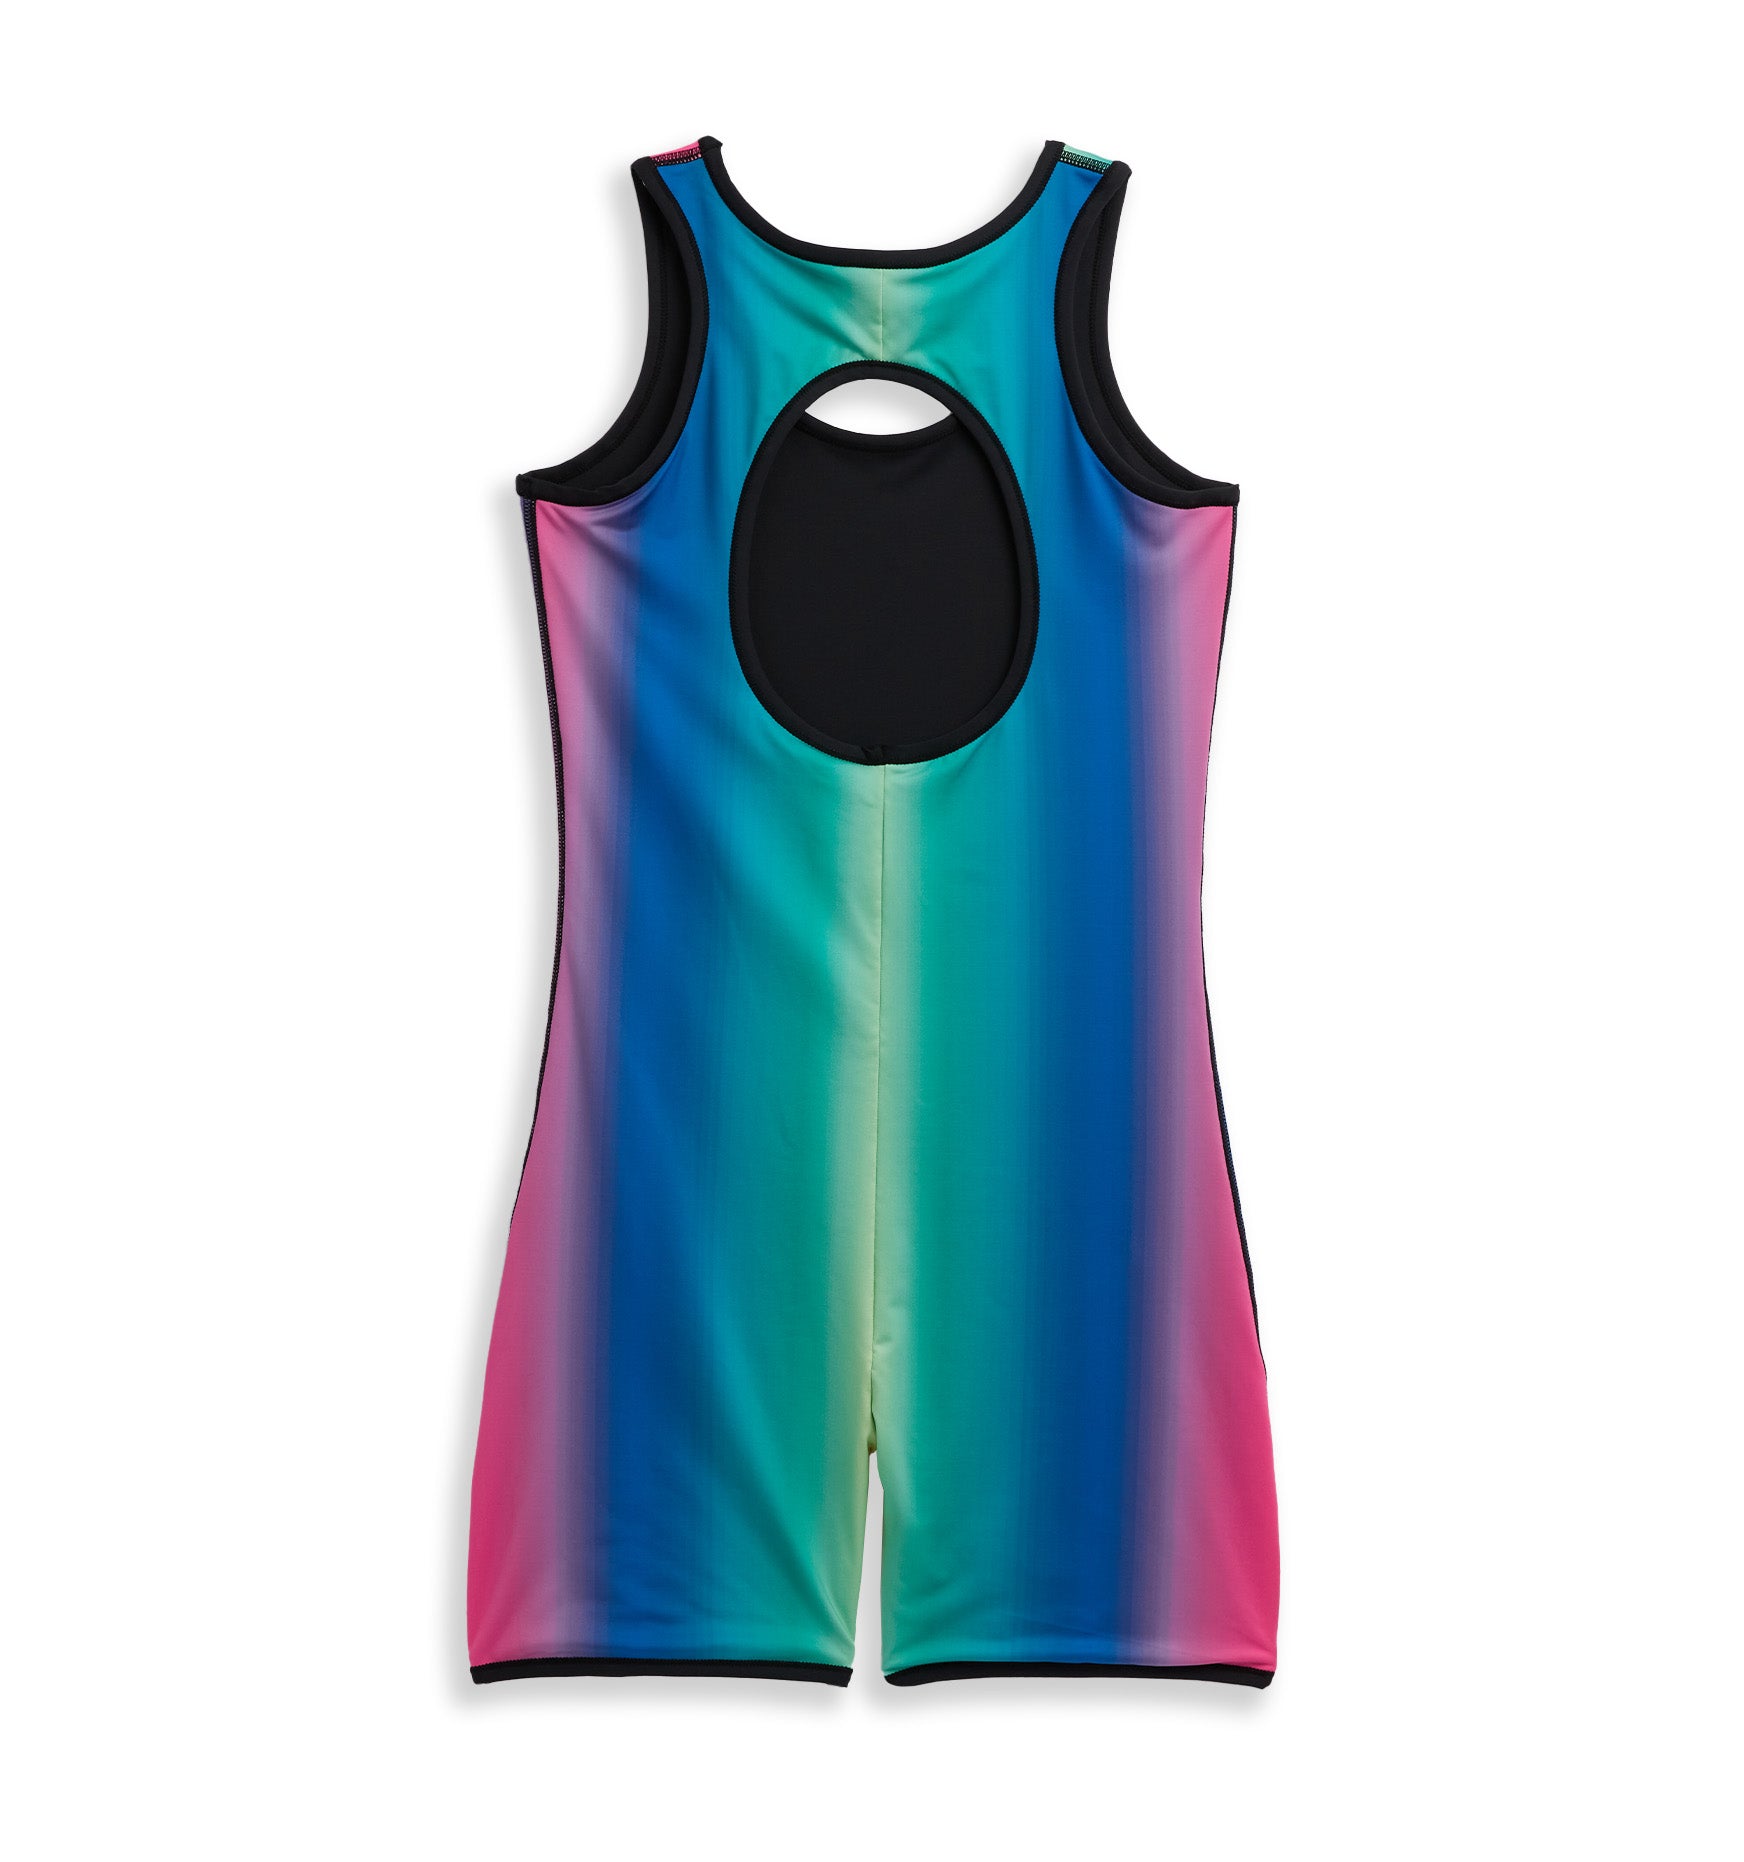 Swim 6" Reversible Unisuit - Melting Rainbow